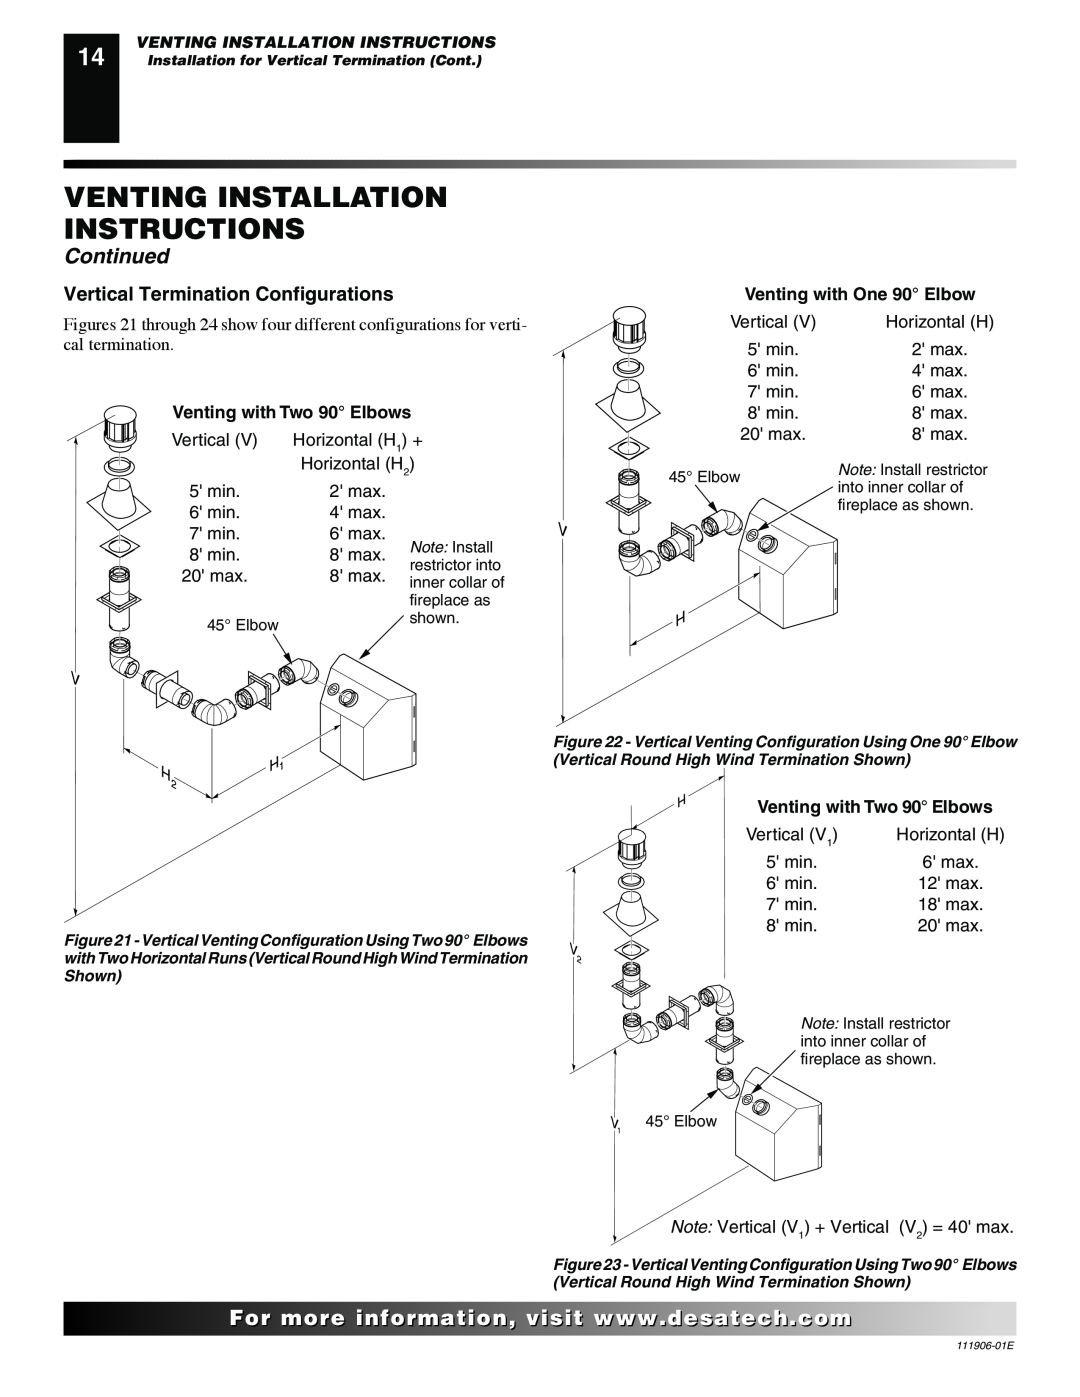 Desa VV42PB(1), CHDV42NR-B Venting Installation Instructions, Continued, For..com, Vertical Termination Configurations 